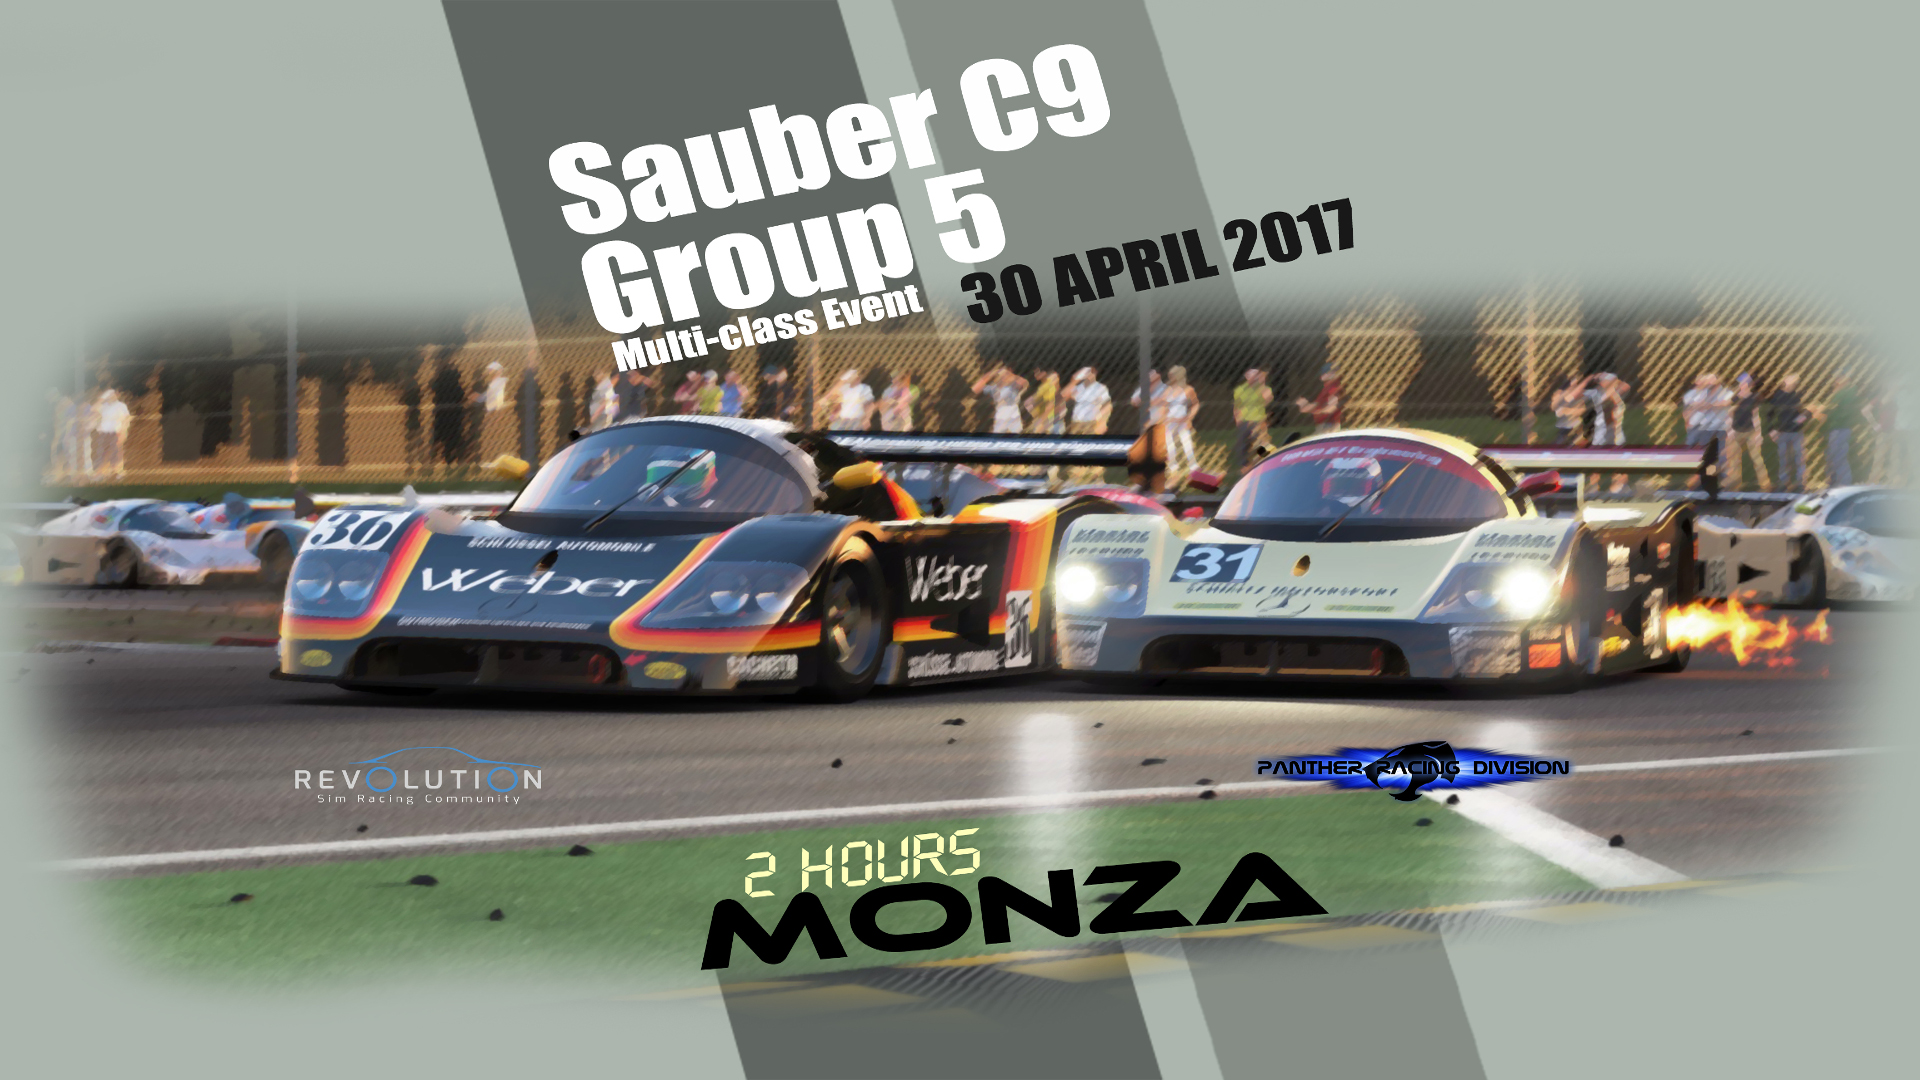 SauberC9_Group5 poster revised2.jpg